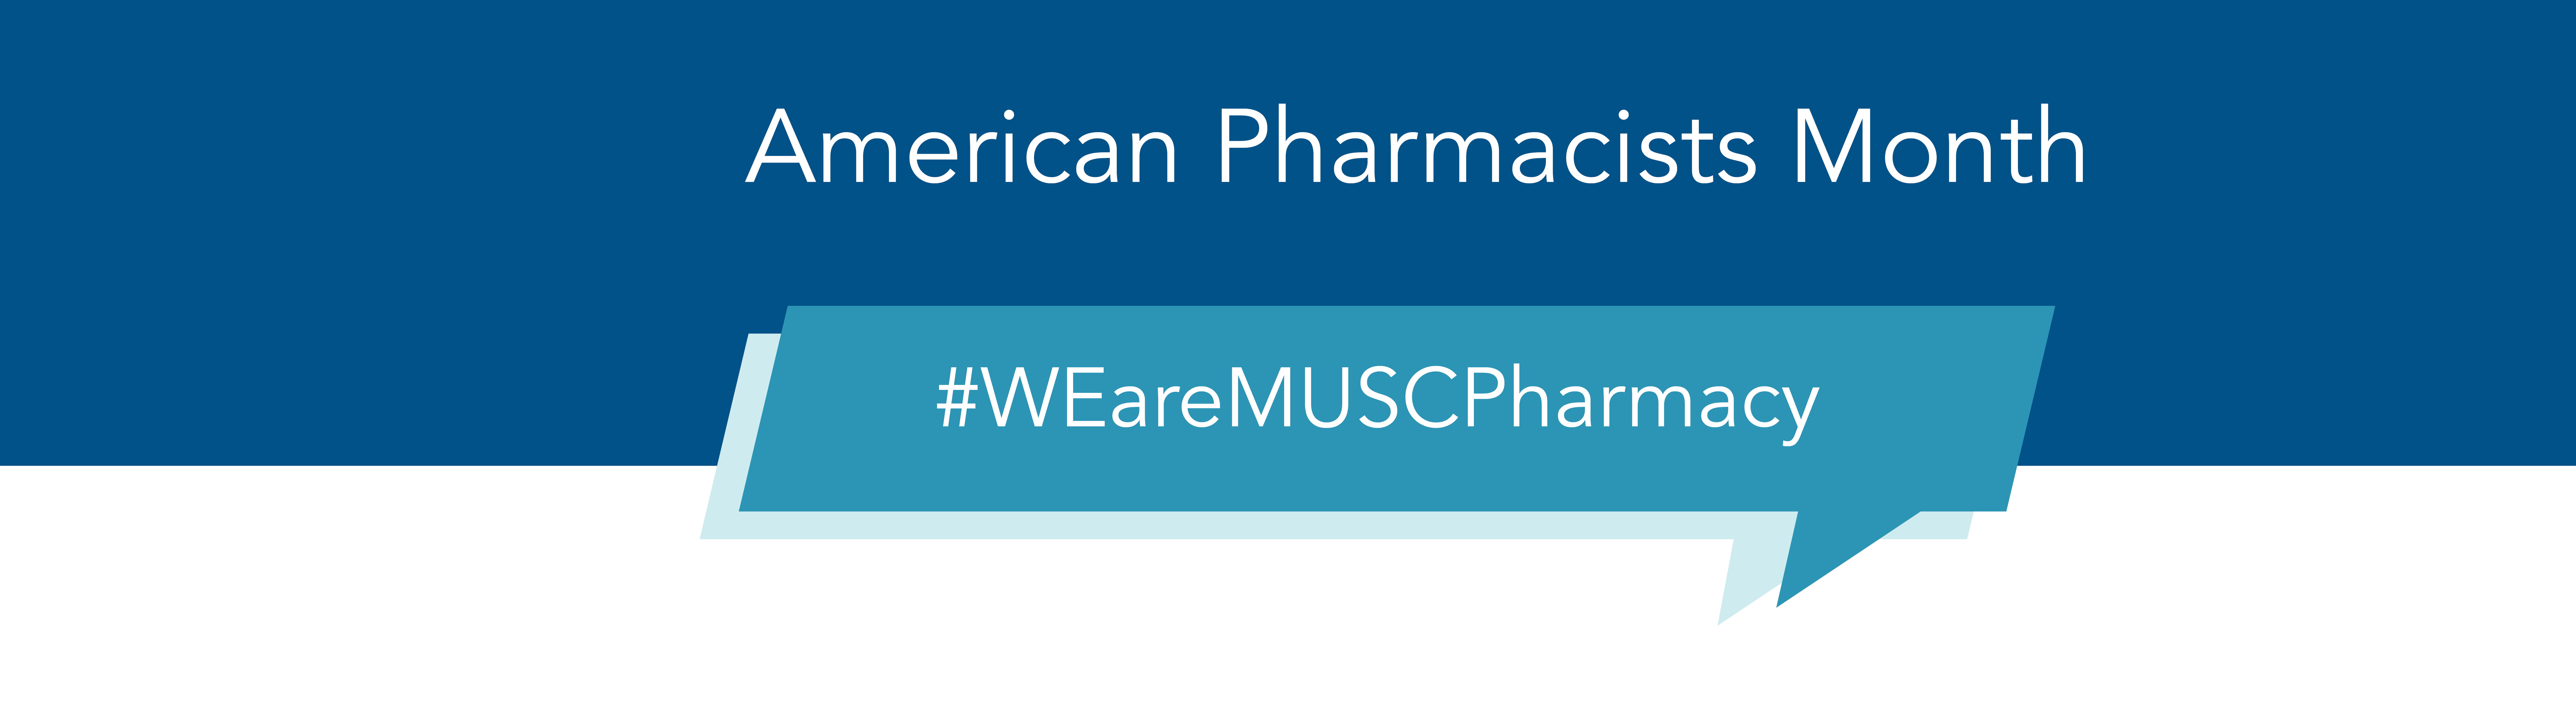 American Pharmacists Month #WeAreMUSCPharmacy